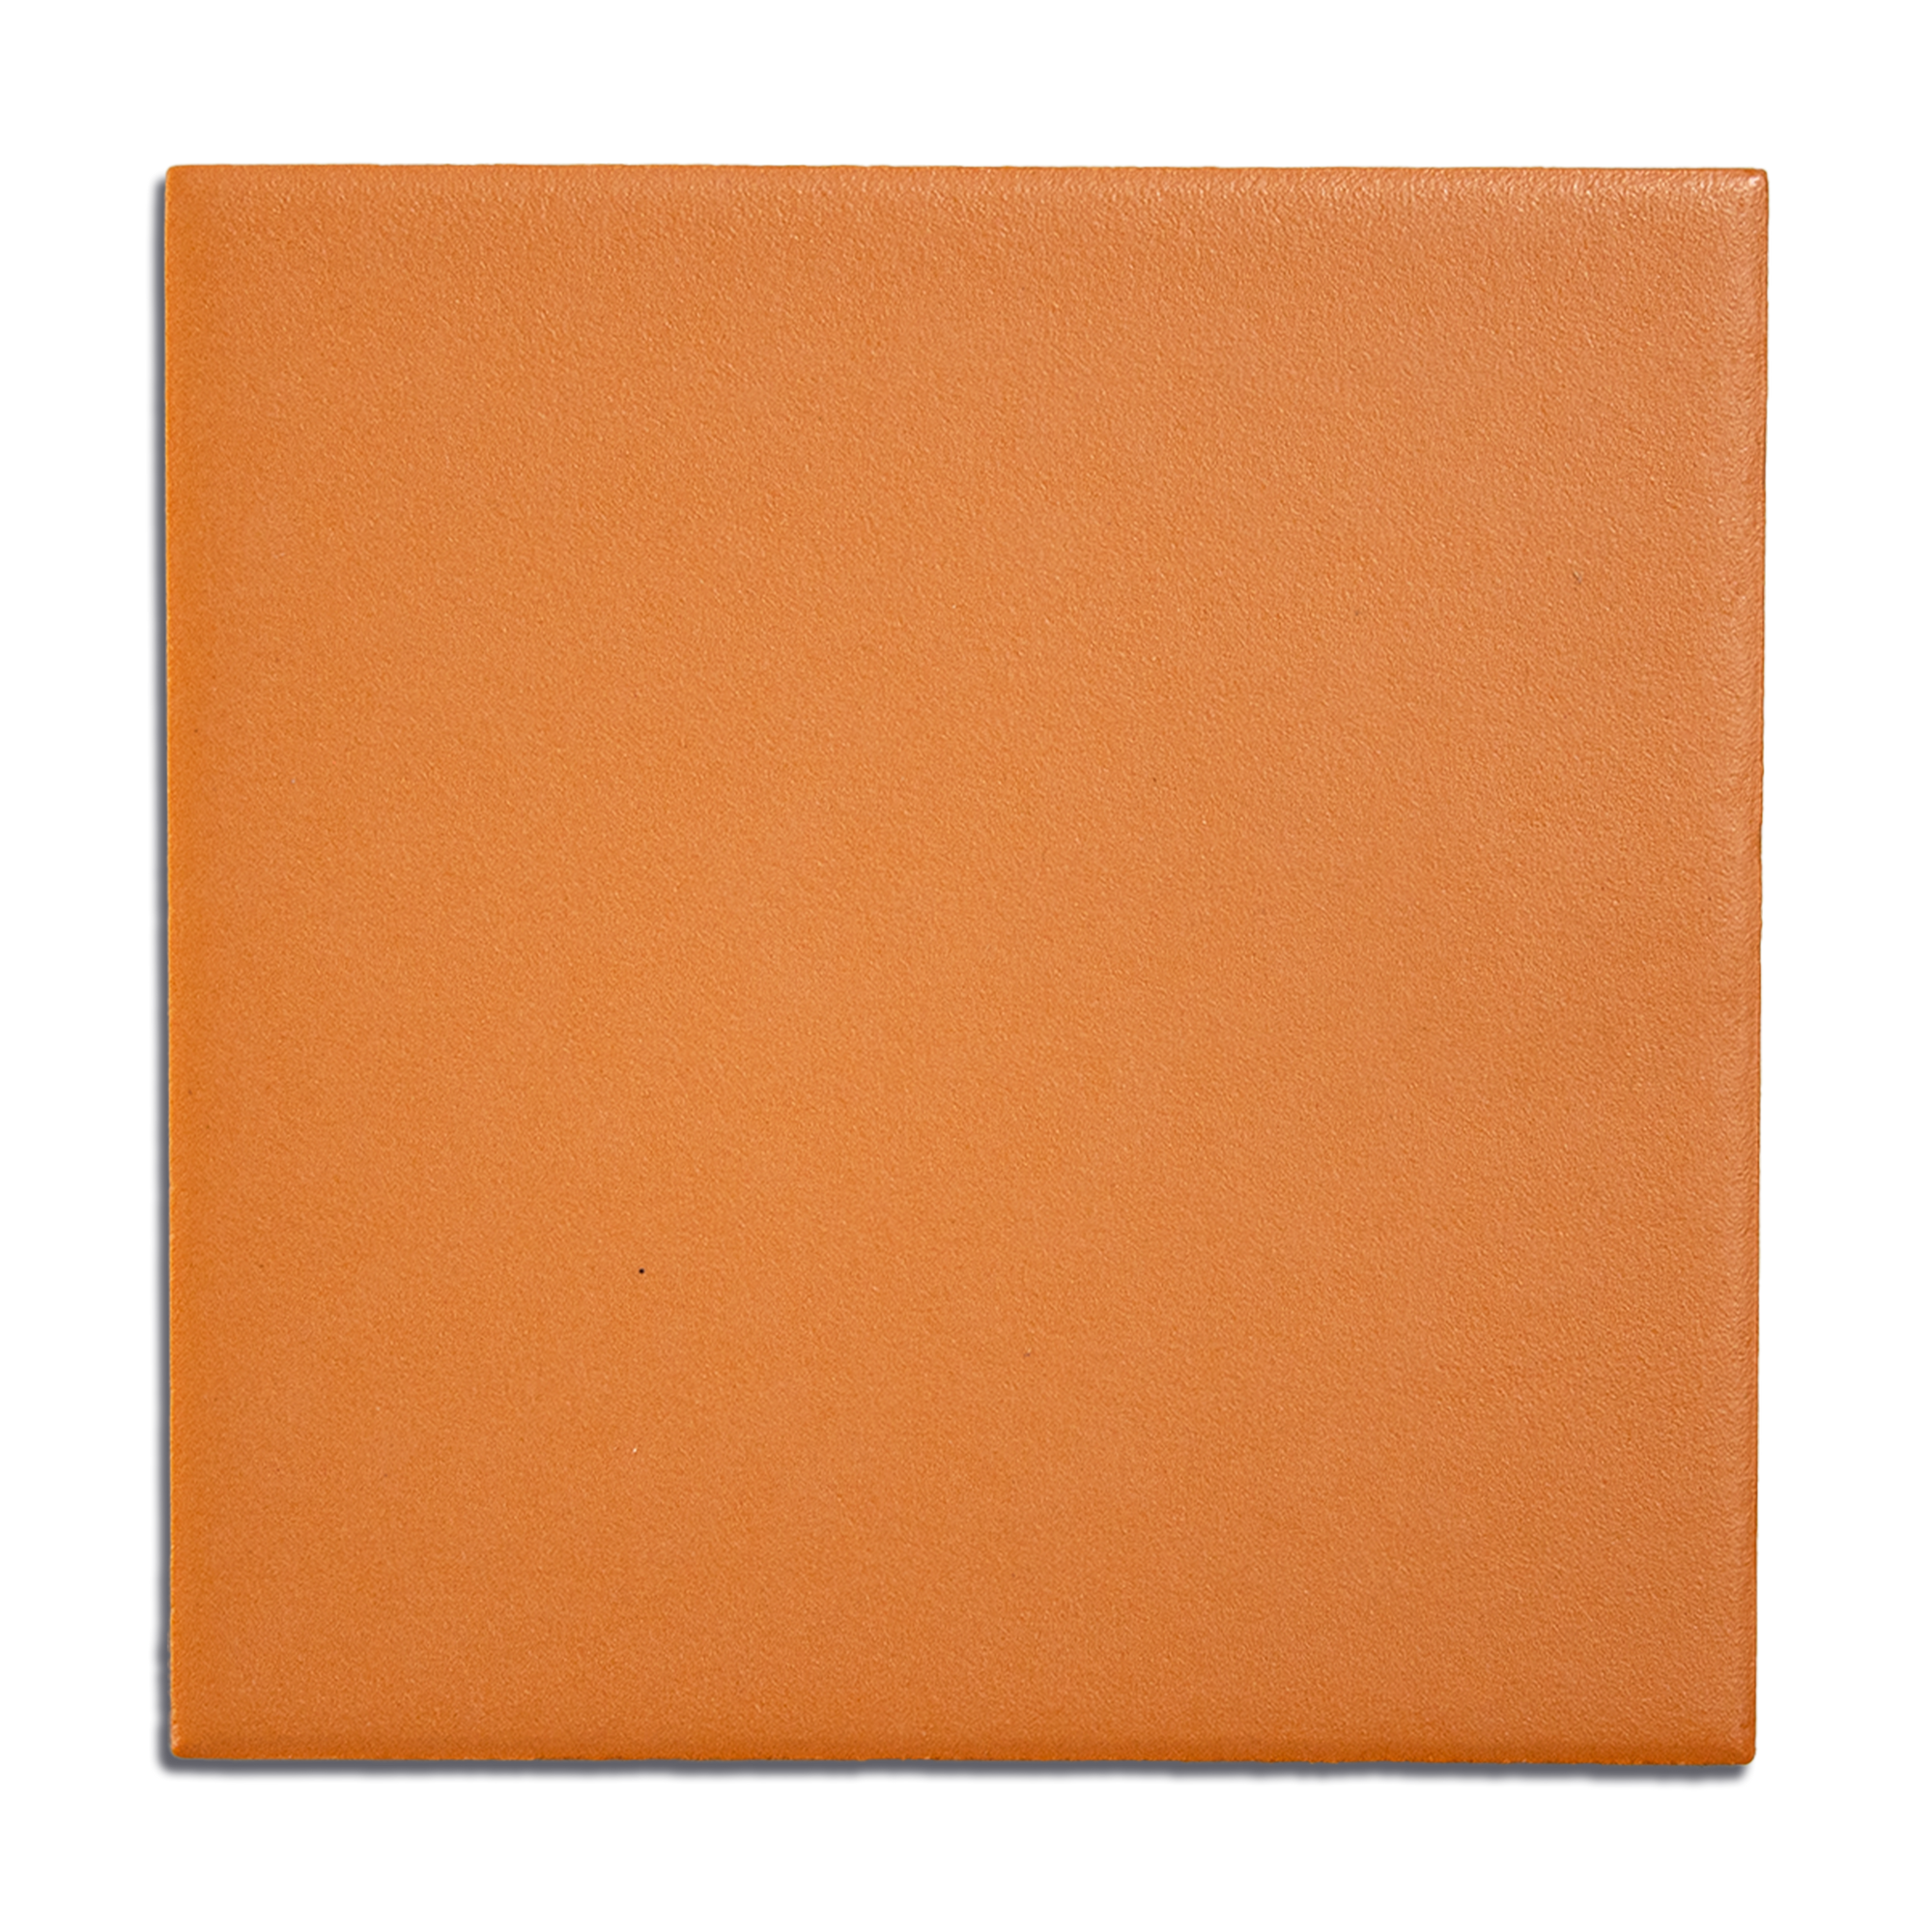 Trucco Square Apricot 5.5x5.5 Full Body Porcelain Tile